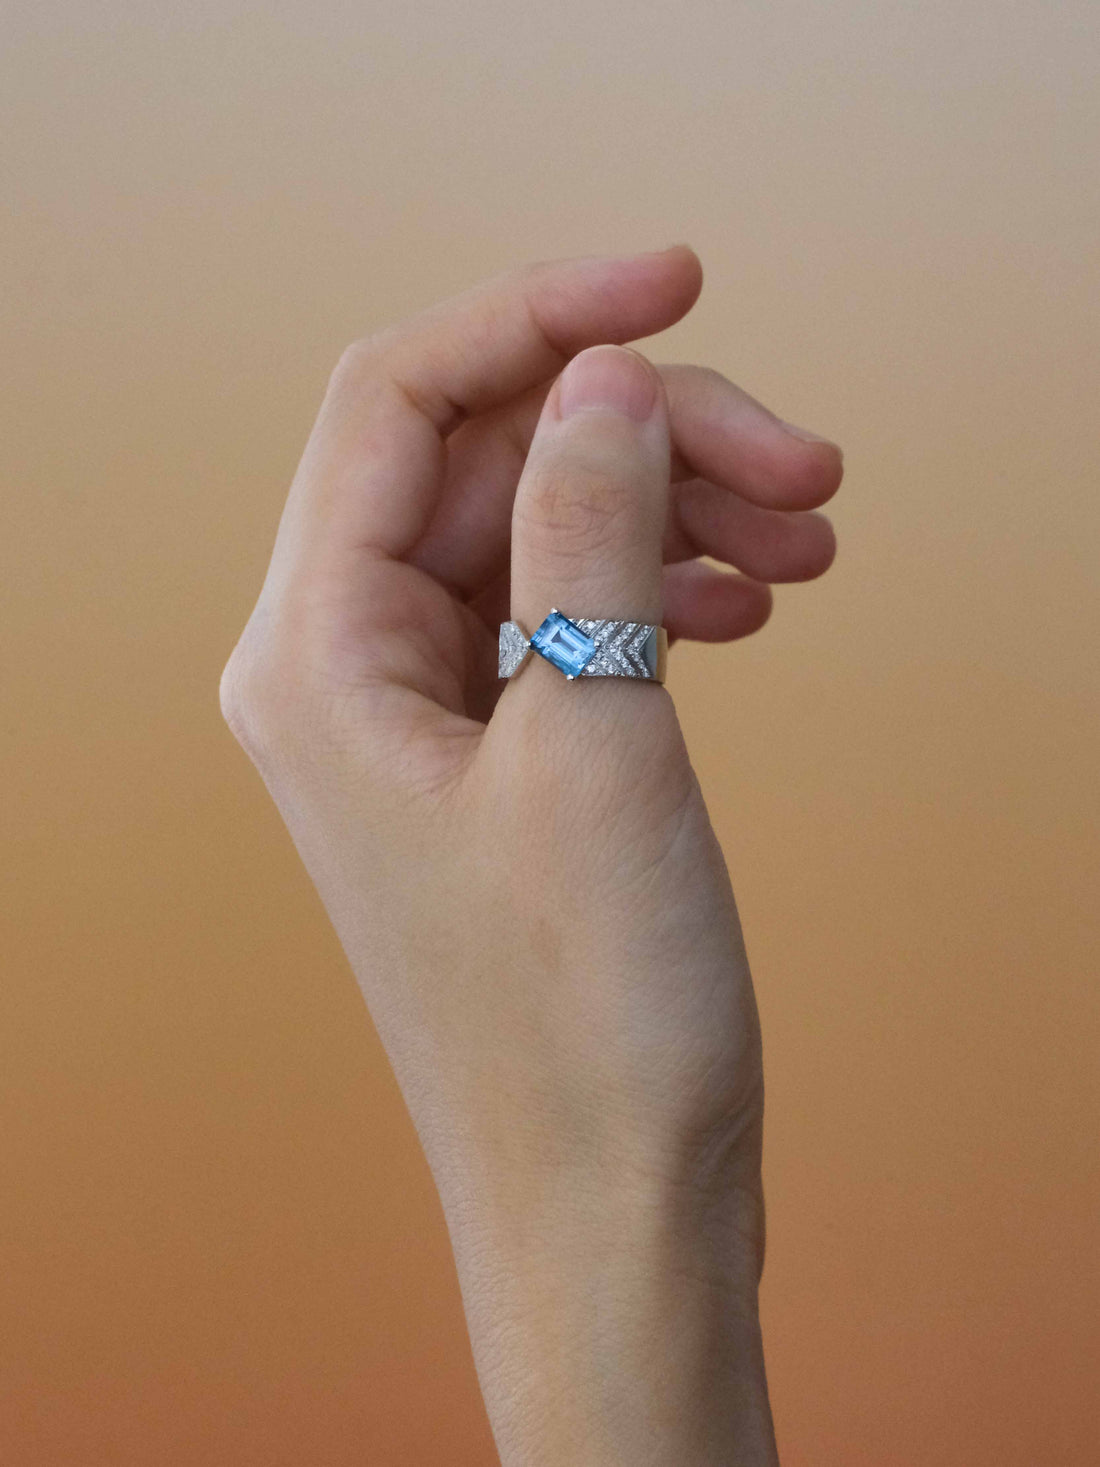 Octagonal Aquamarine and Diamond Band Ring, 18k solid white gold